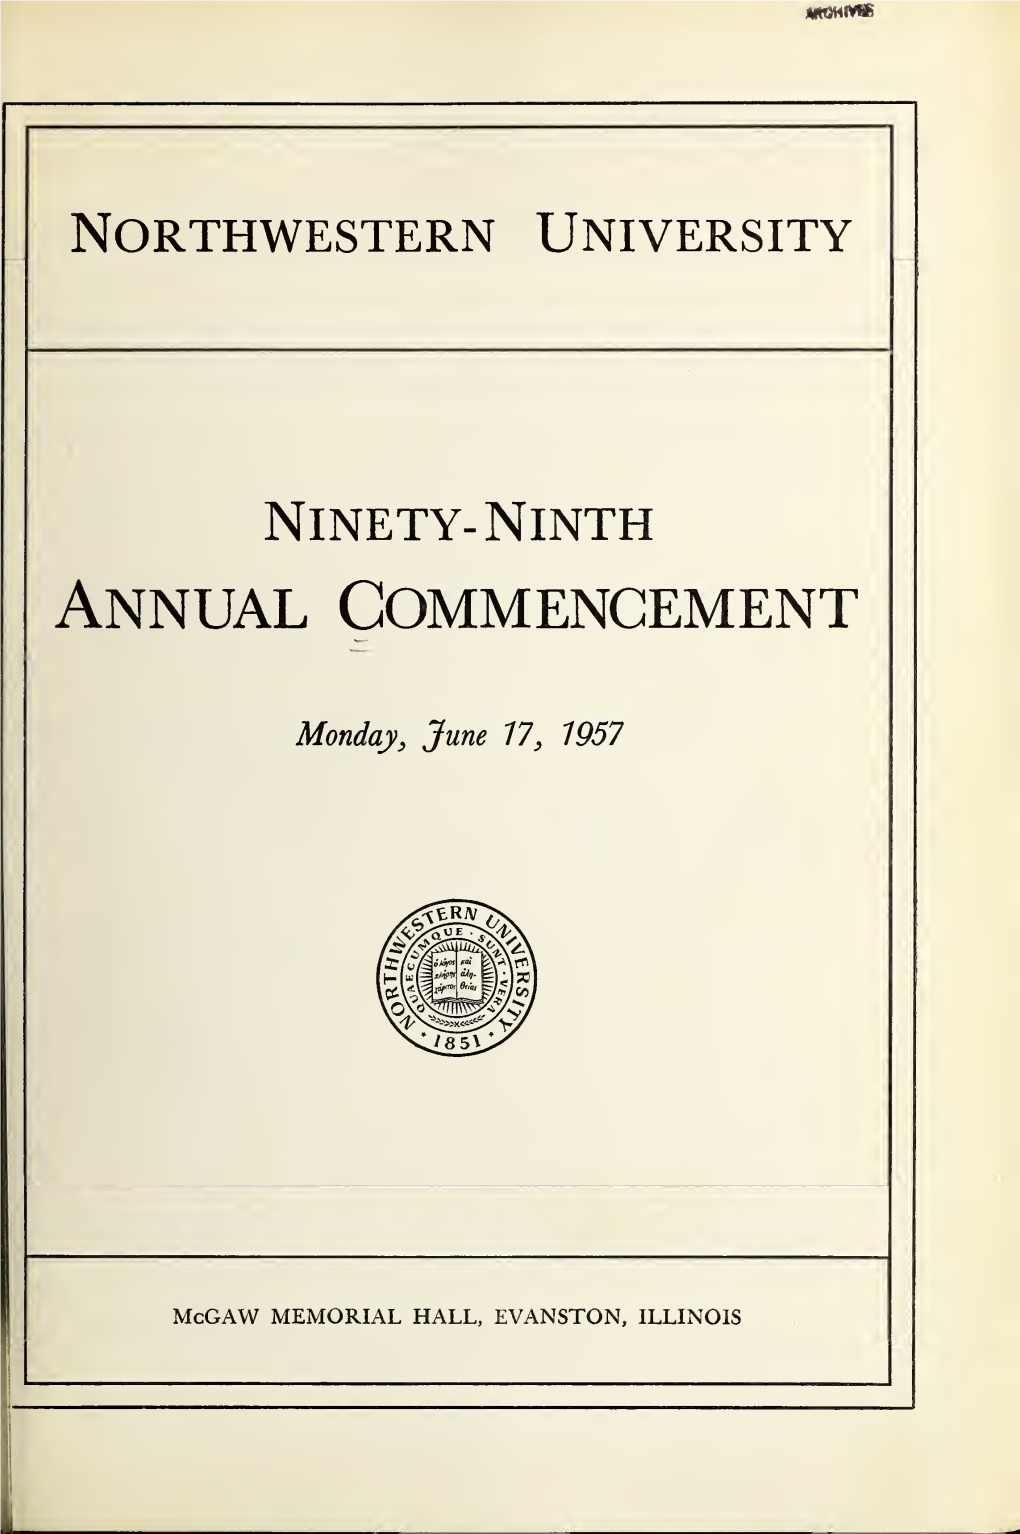 Annual Commencement / Northwestern University